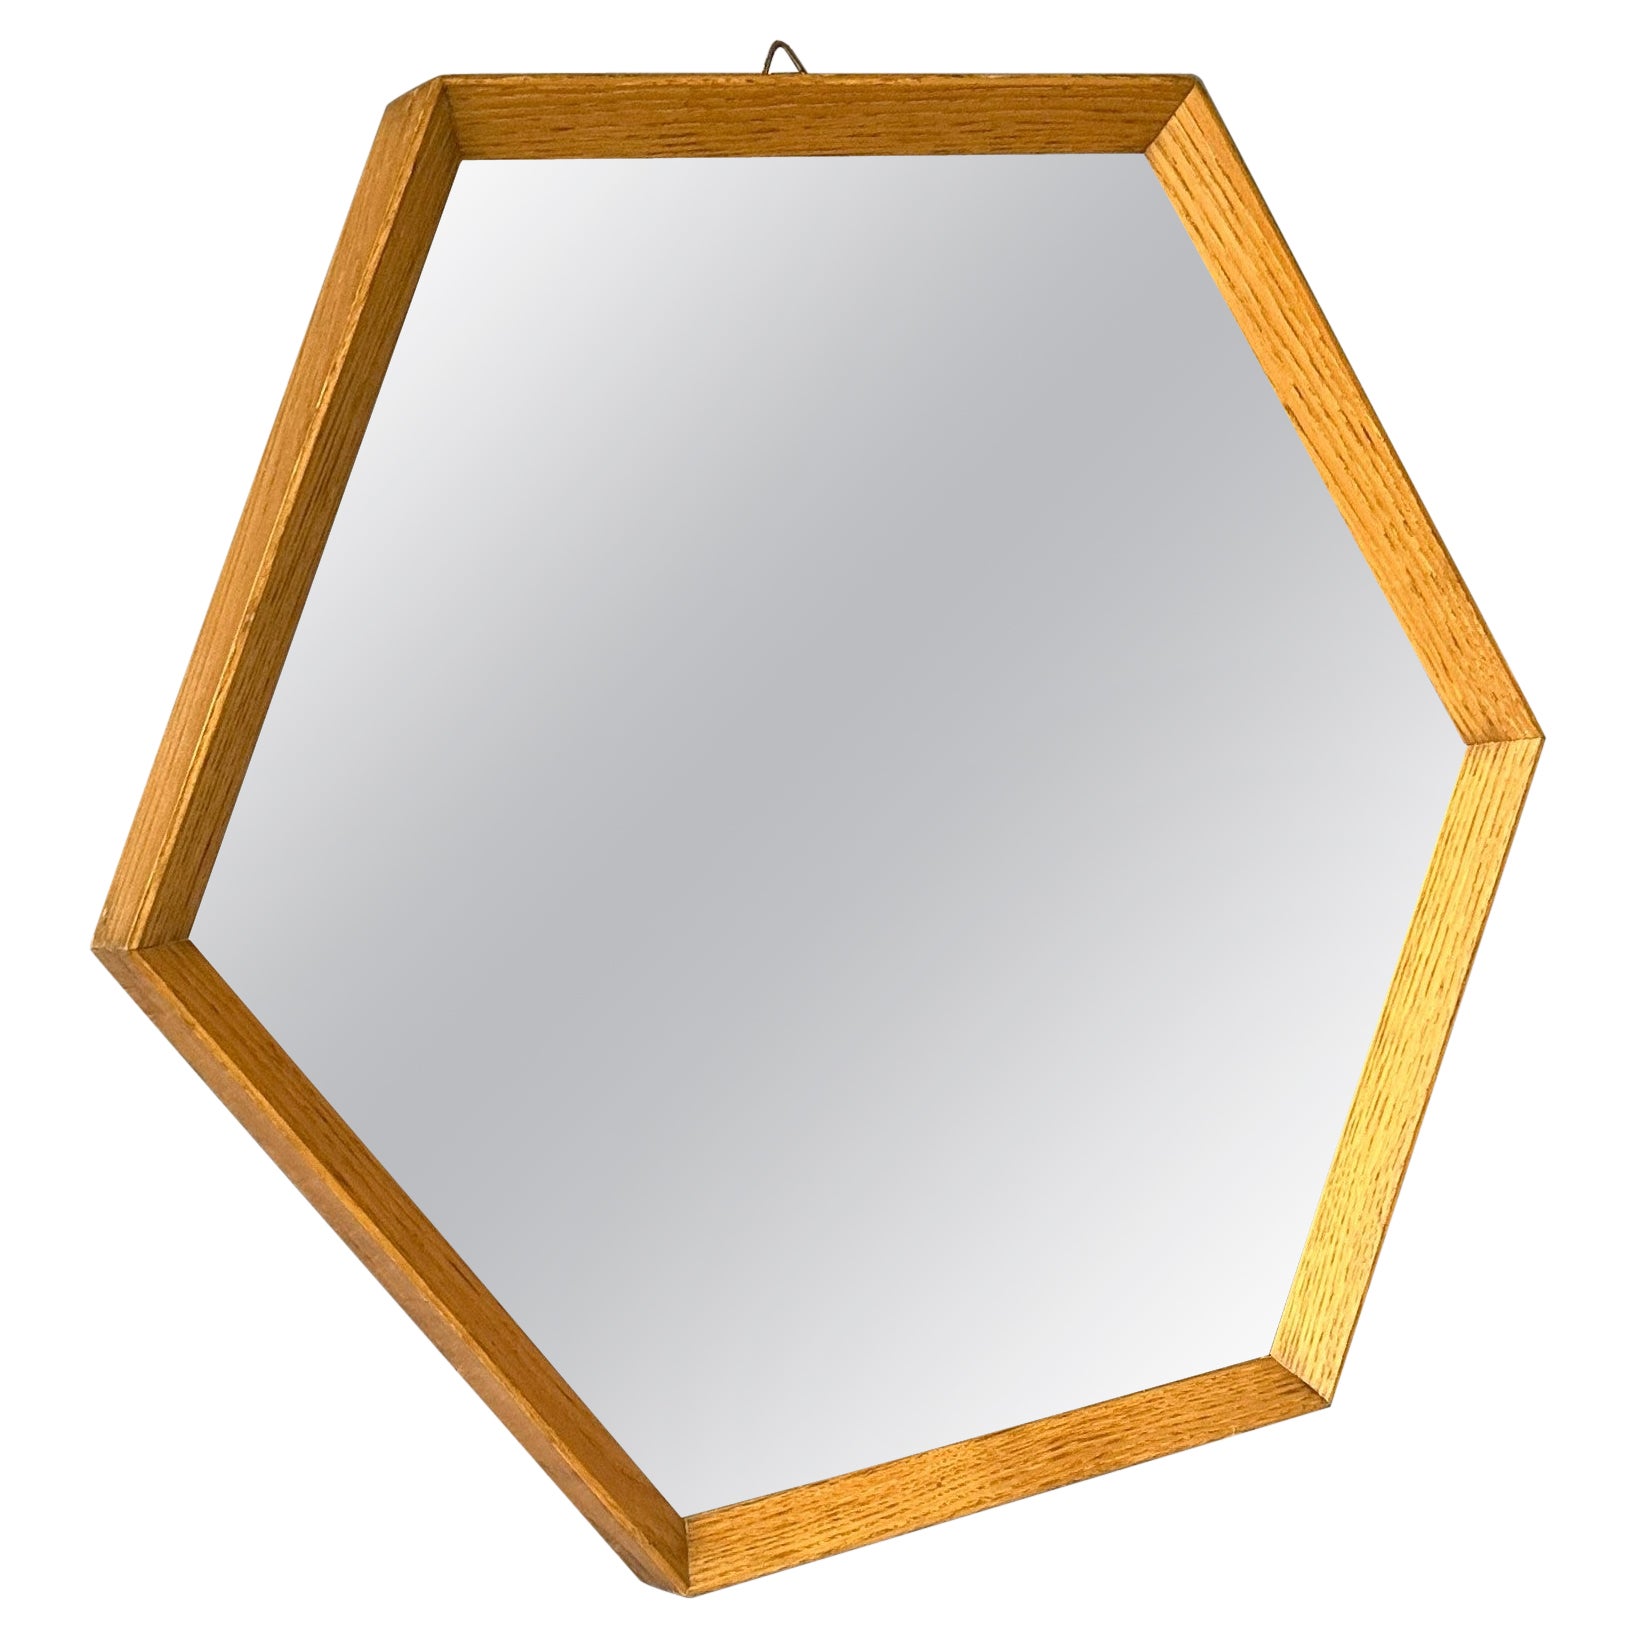 Mid-Century Modern hexagonal Mirror with oak wood frame 1960 Italian manufacture For Sale